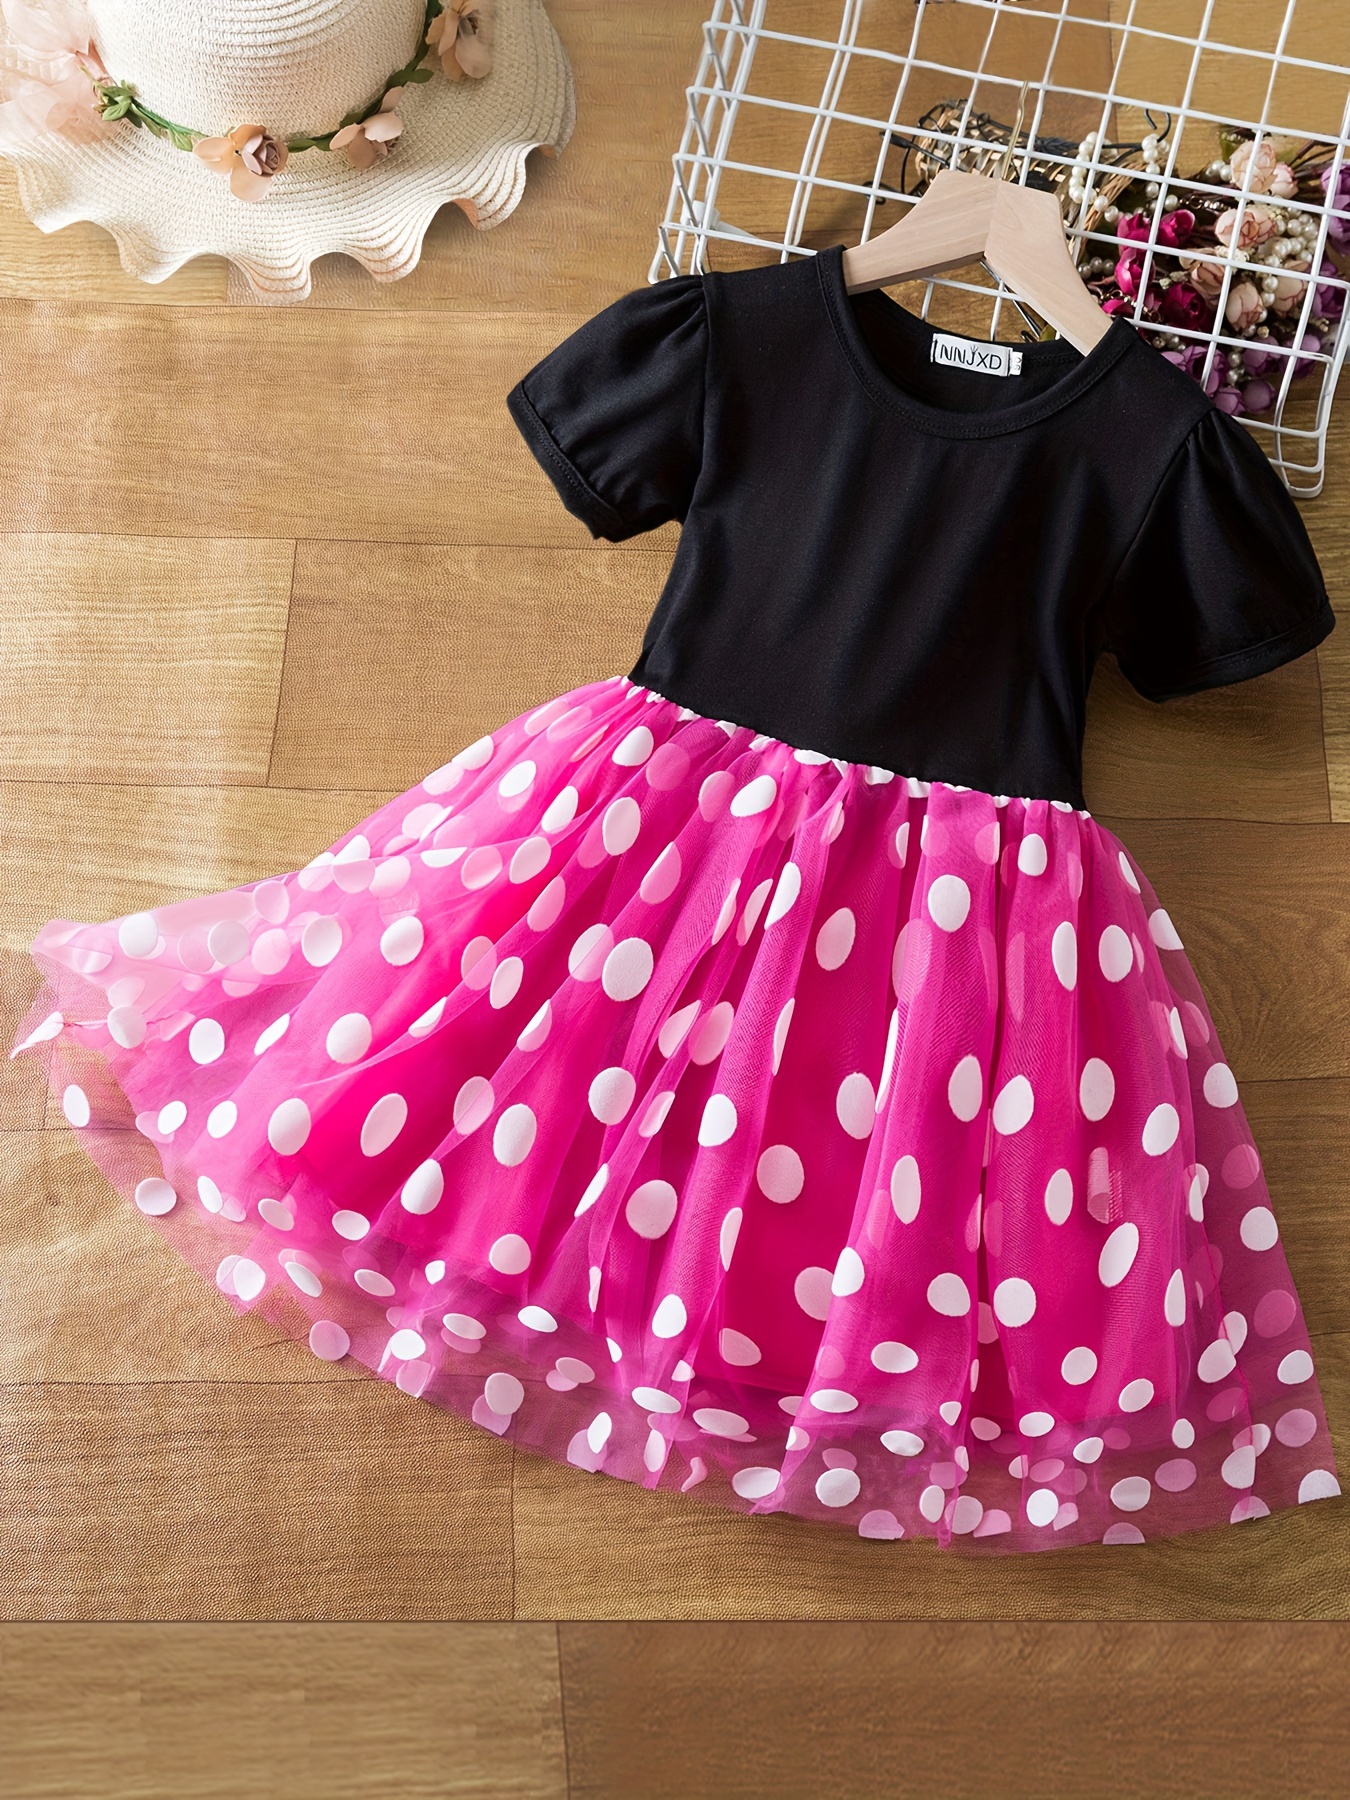 Niños Niñas Minnie Mouse cosplay Disfraz Polka Dot Tul Vestido con diadema  Fancy Dress